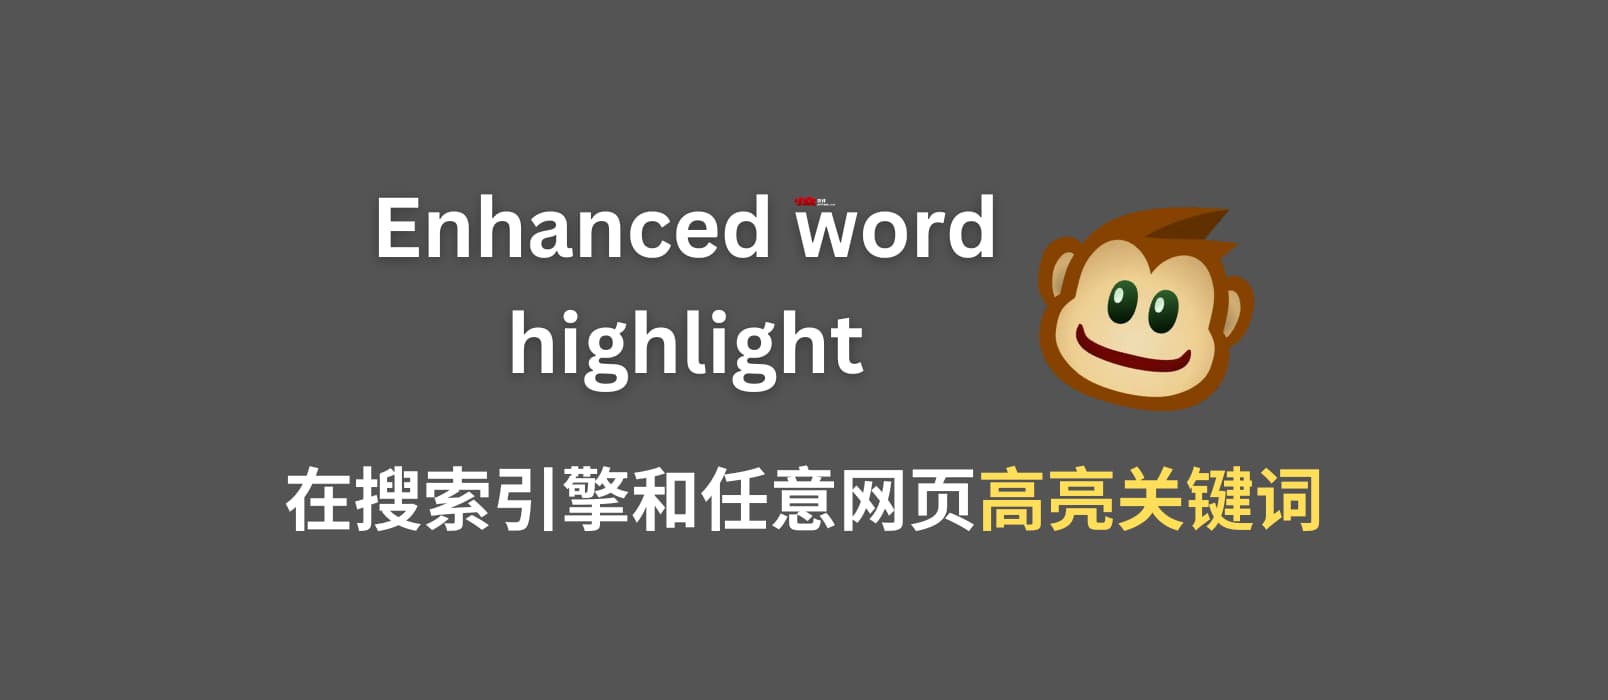 Enhanced word highlight - 创建10年的油猴脚本又更新了：在搜索引擎和网页高亮关键词